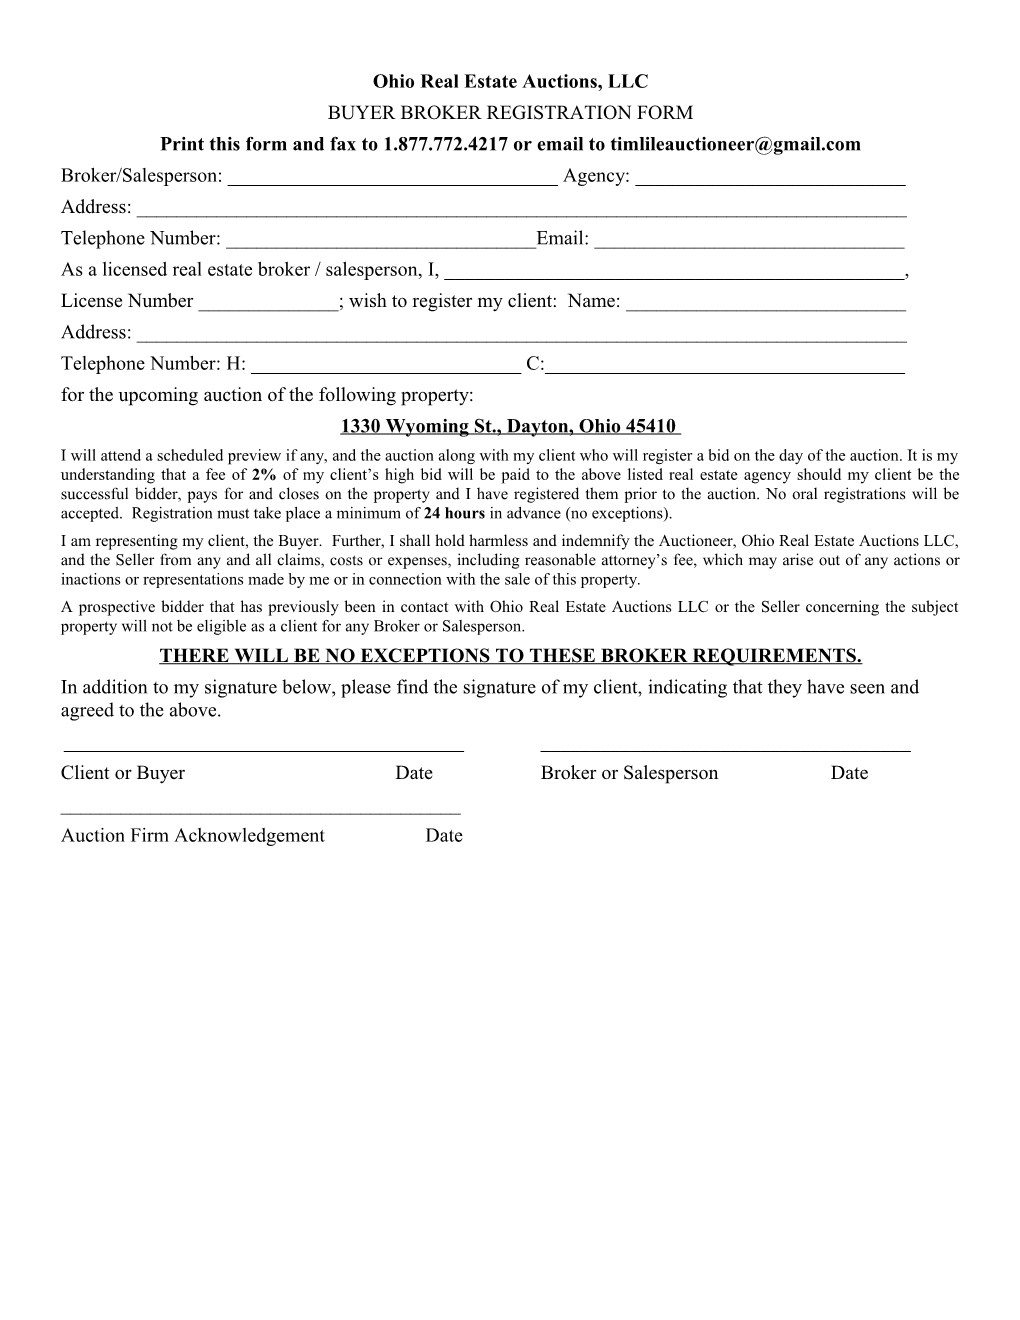 Buyer Broker Registration Form